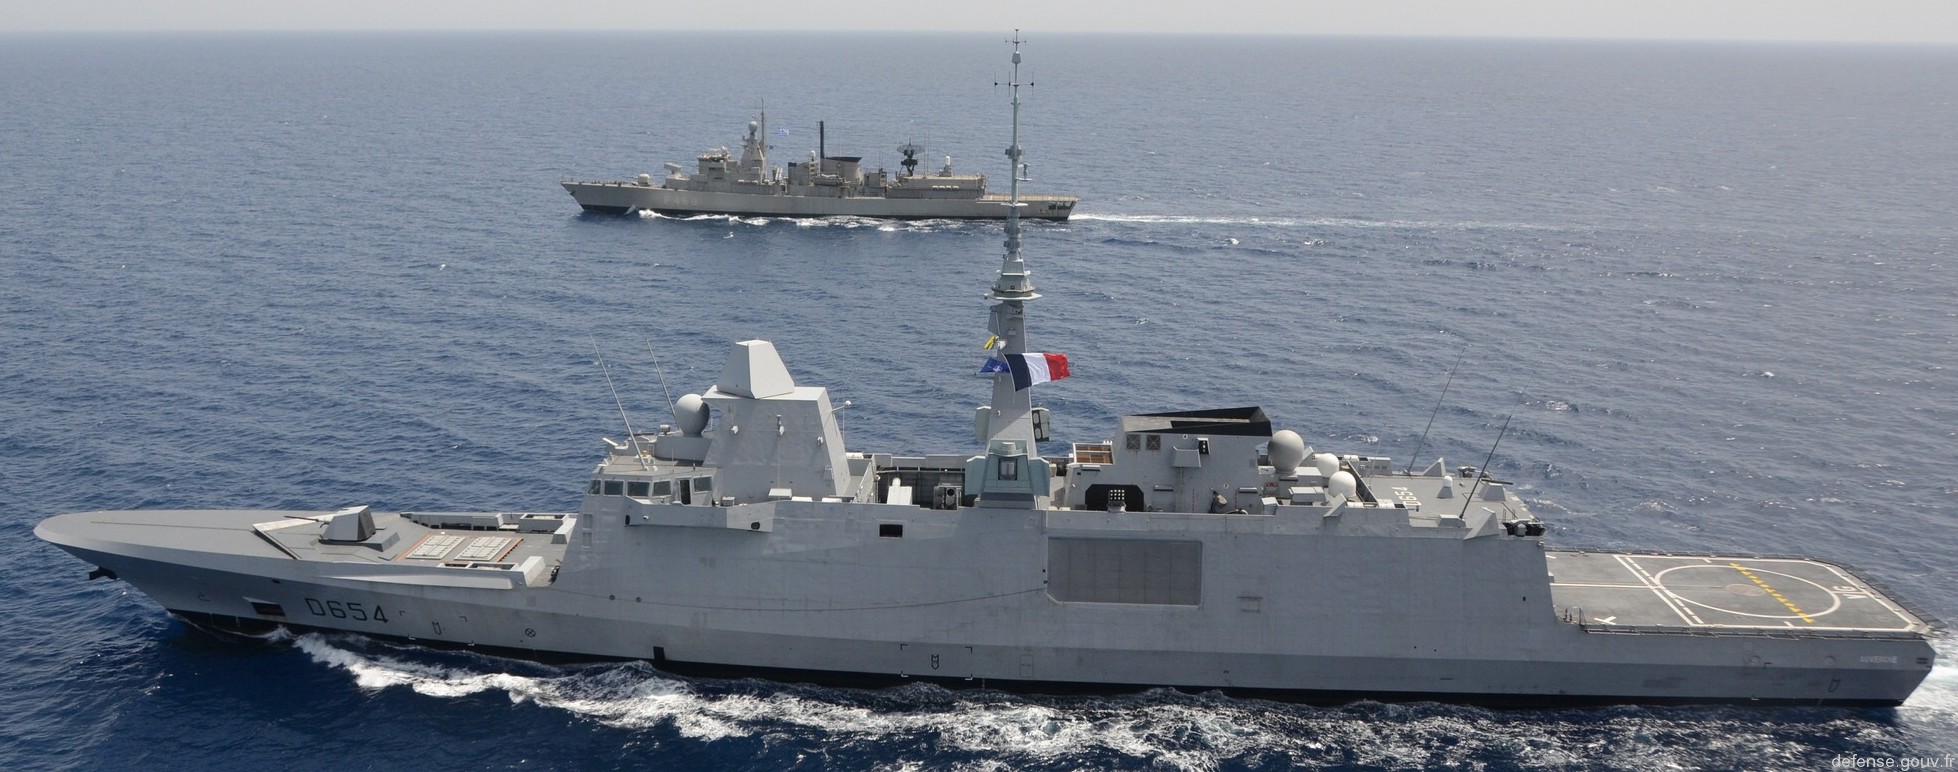 d-654 fs auvergne fremm aquitaine class frigate fregate multi purpose french navy marine nationale 20